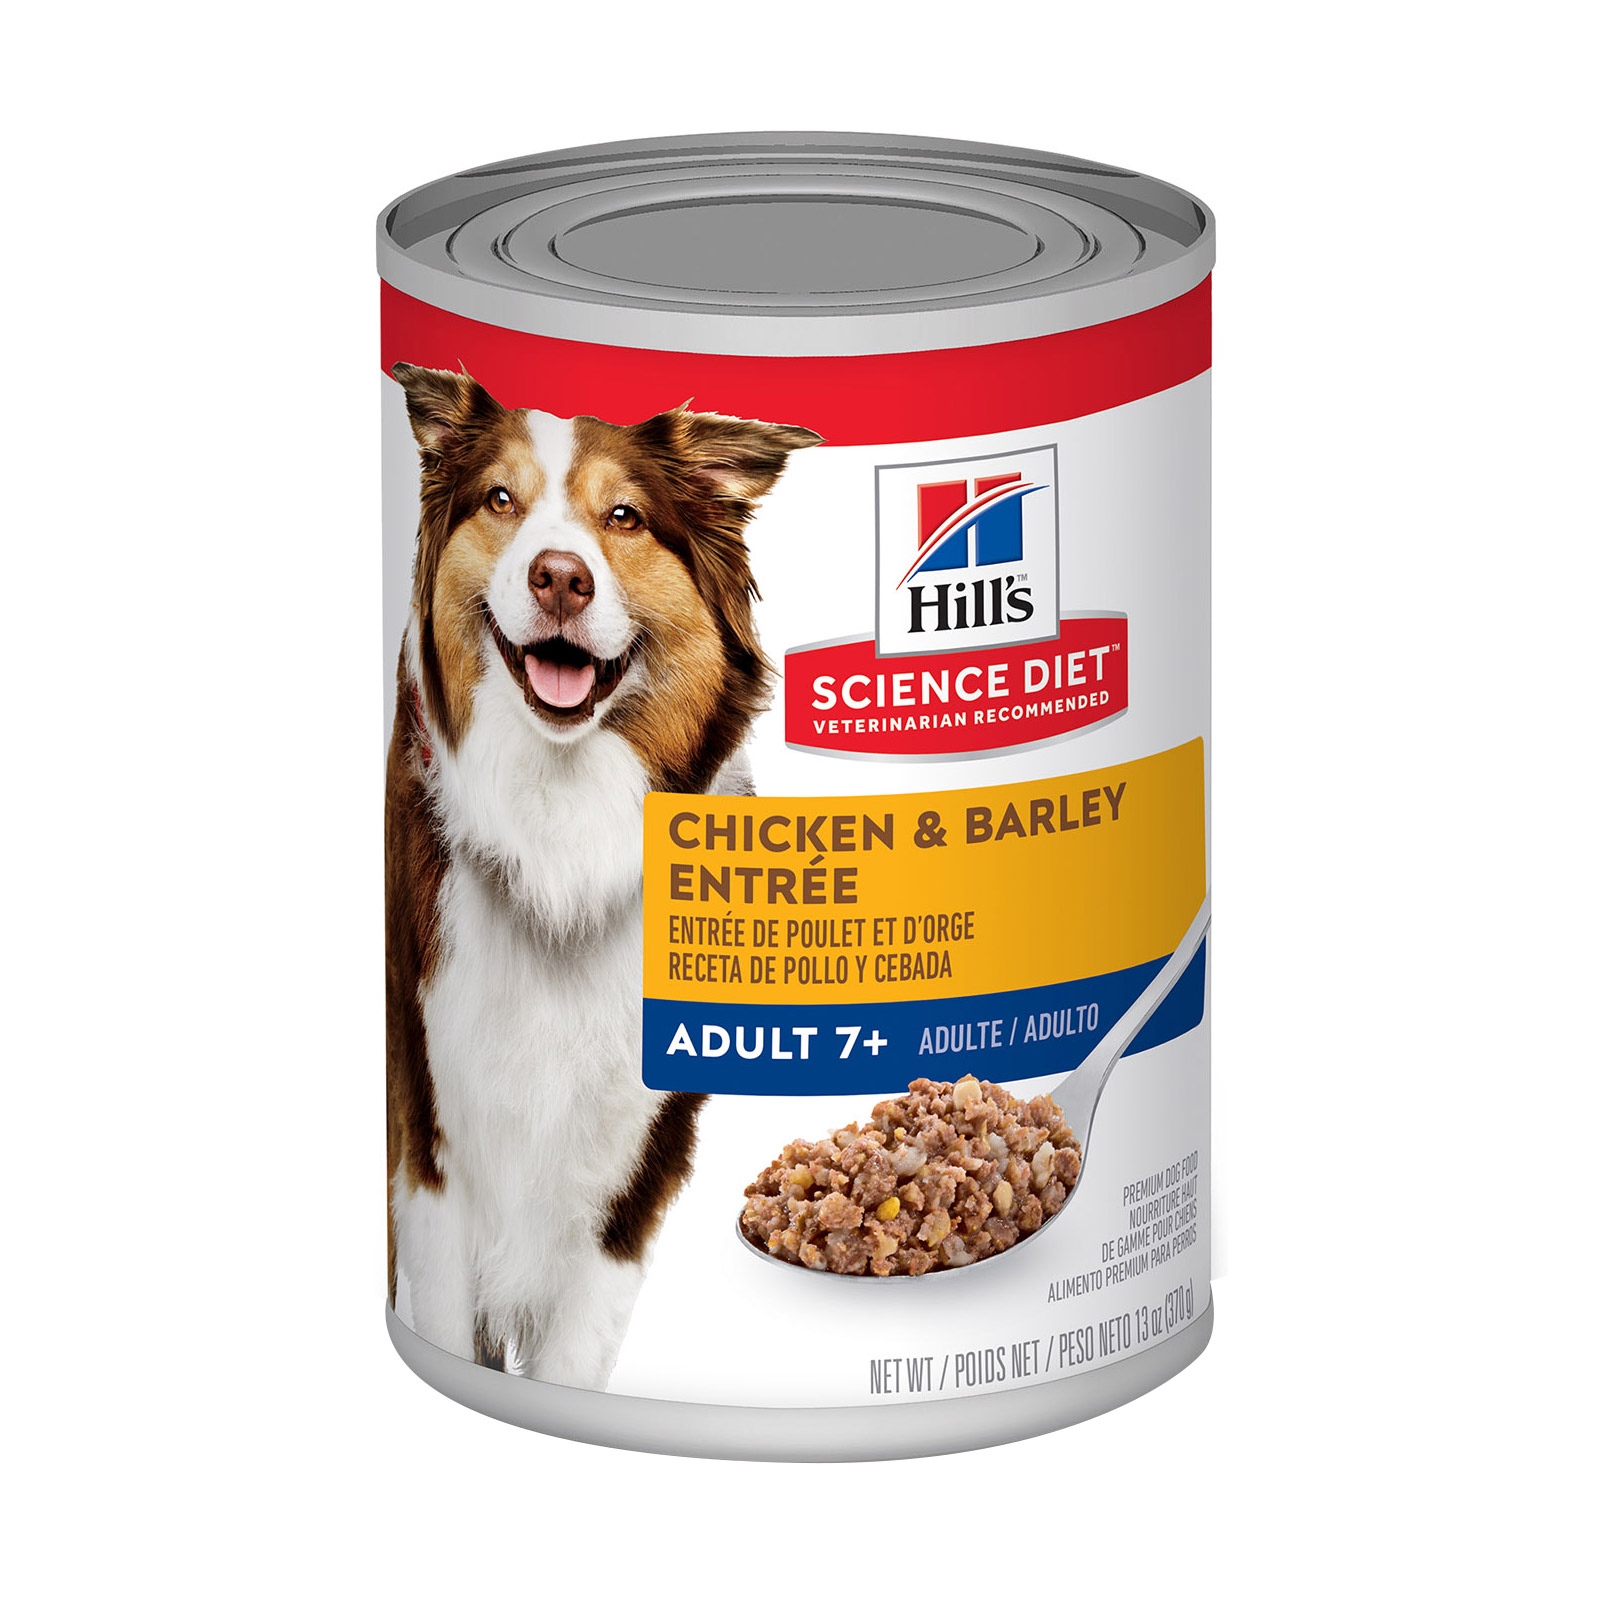 Hill's Science Diet Adult 7+ Chicken & Barley Entrée Canned Dog Food for Food